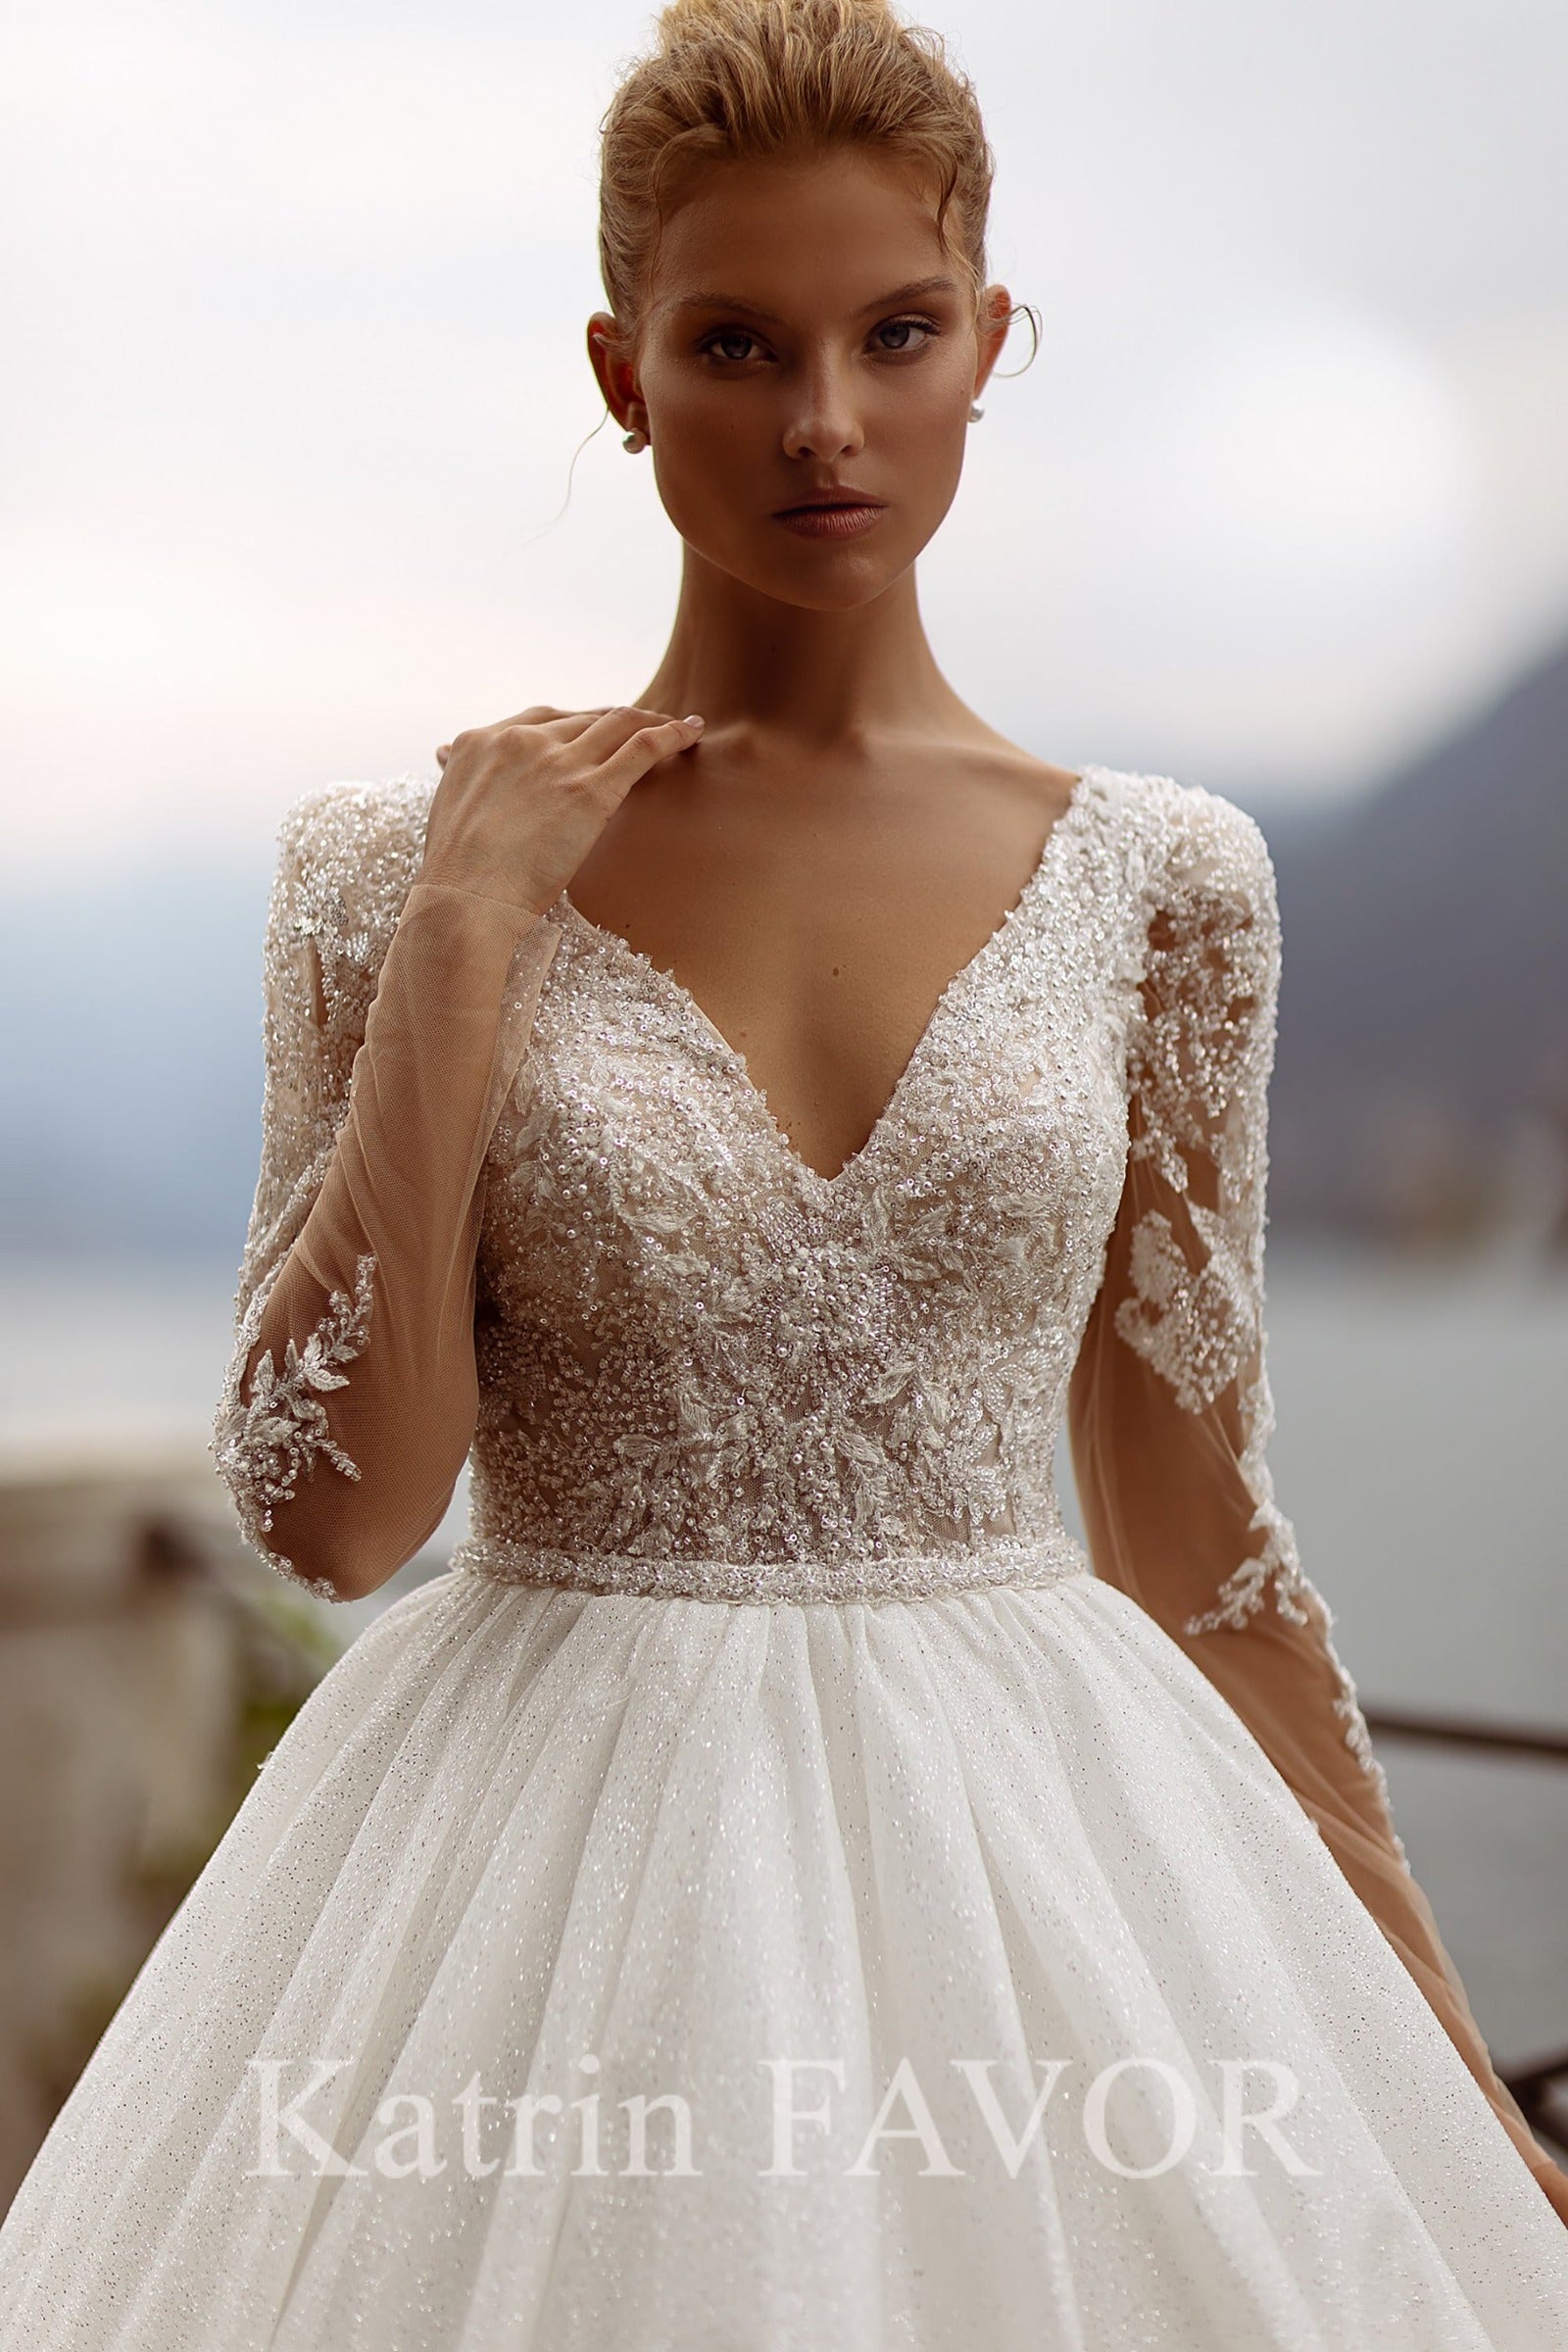 KatrinFAVORboutique-Sparkle ballgown long sleeve wedding dress